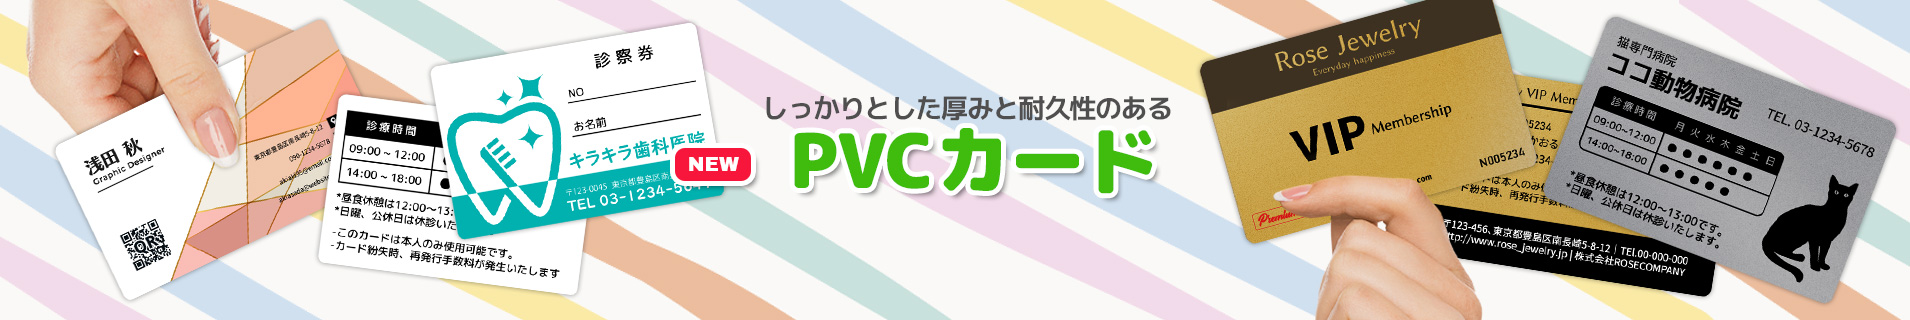 pvc_card